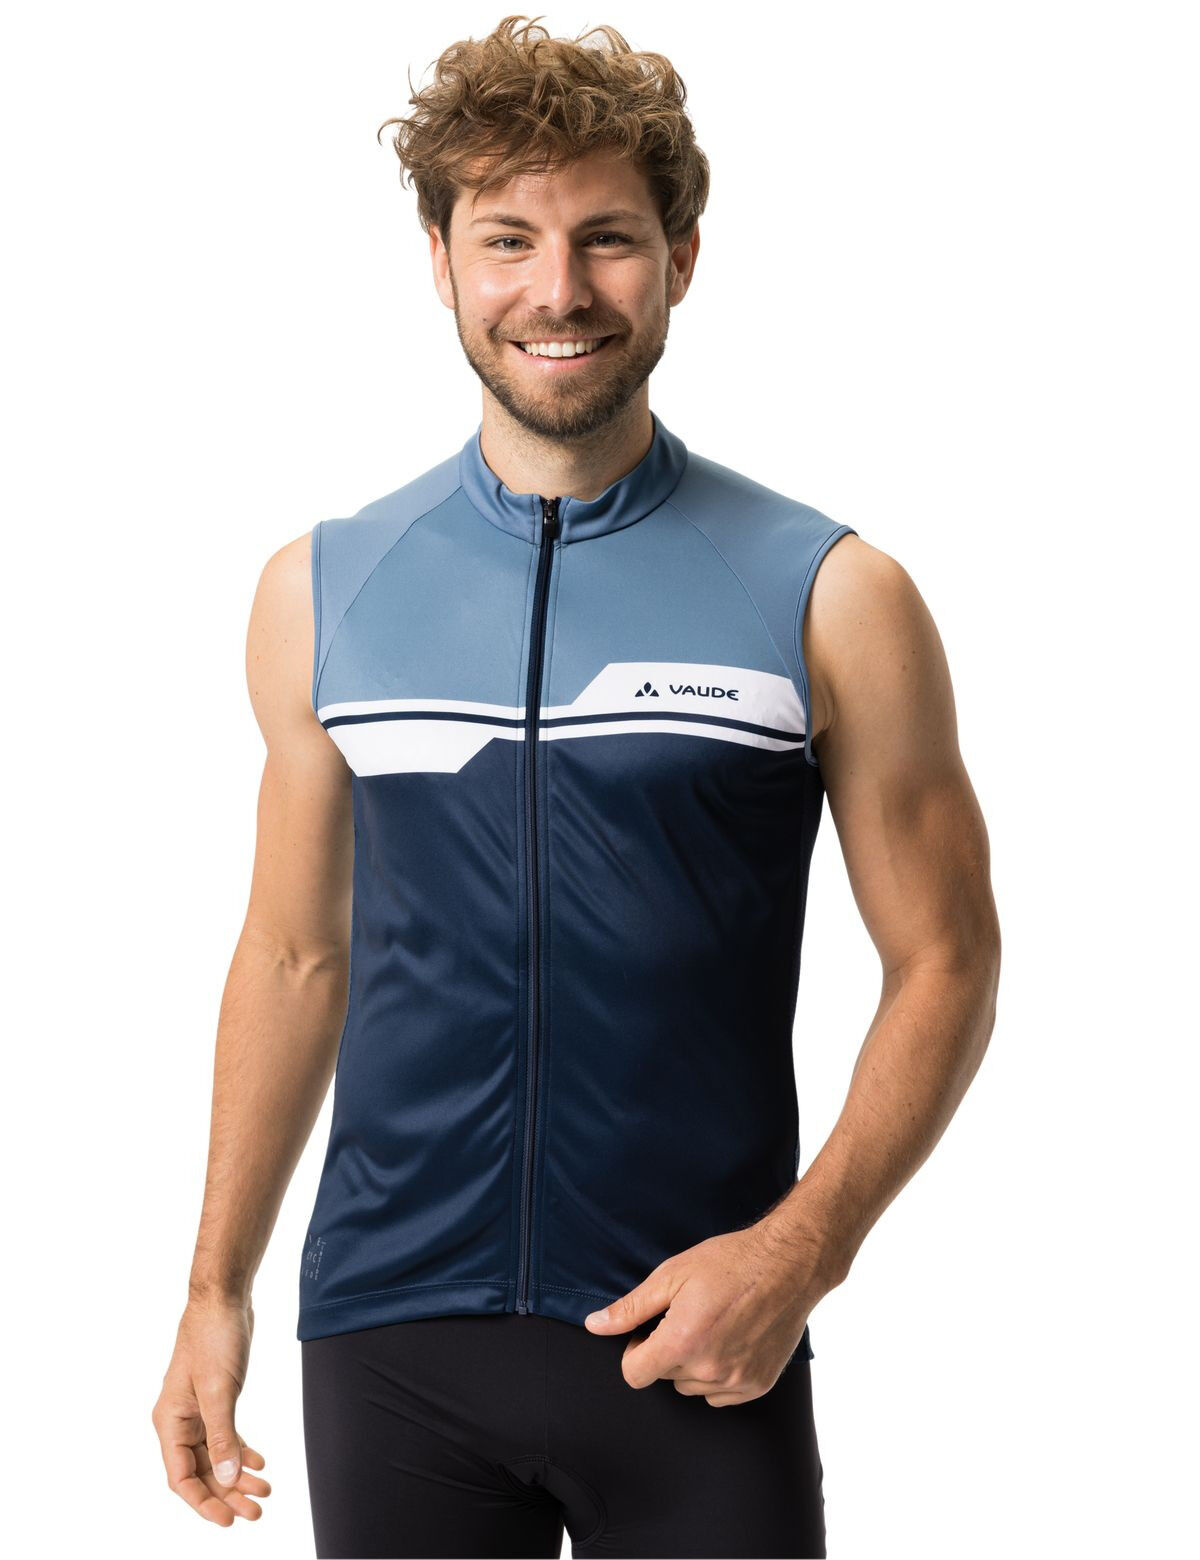 Vaude Posta FZ Tricot SL - Cycling jersey - Men's